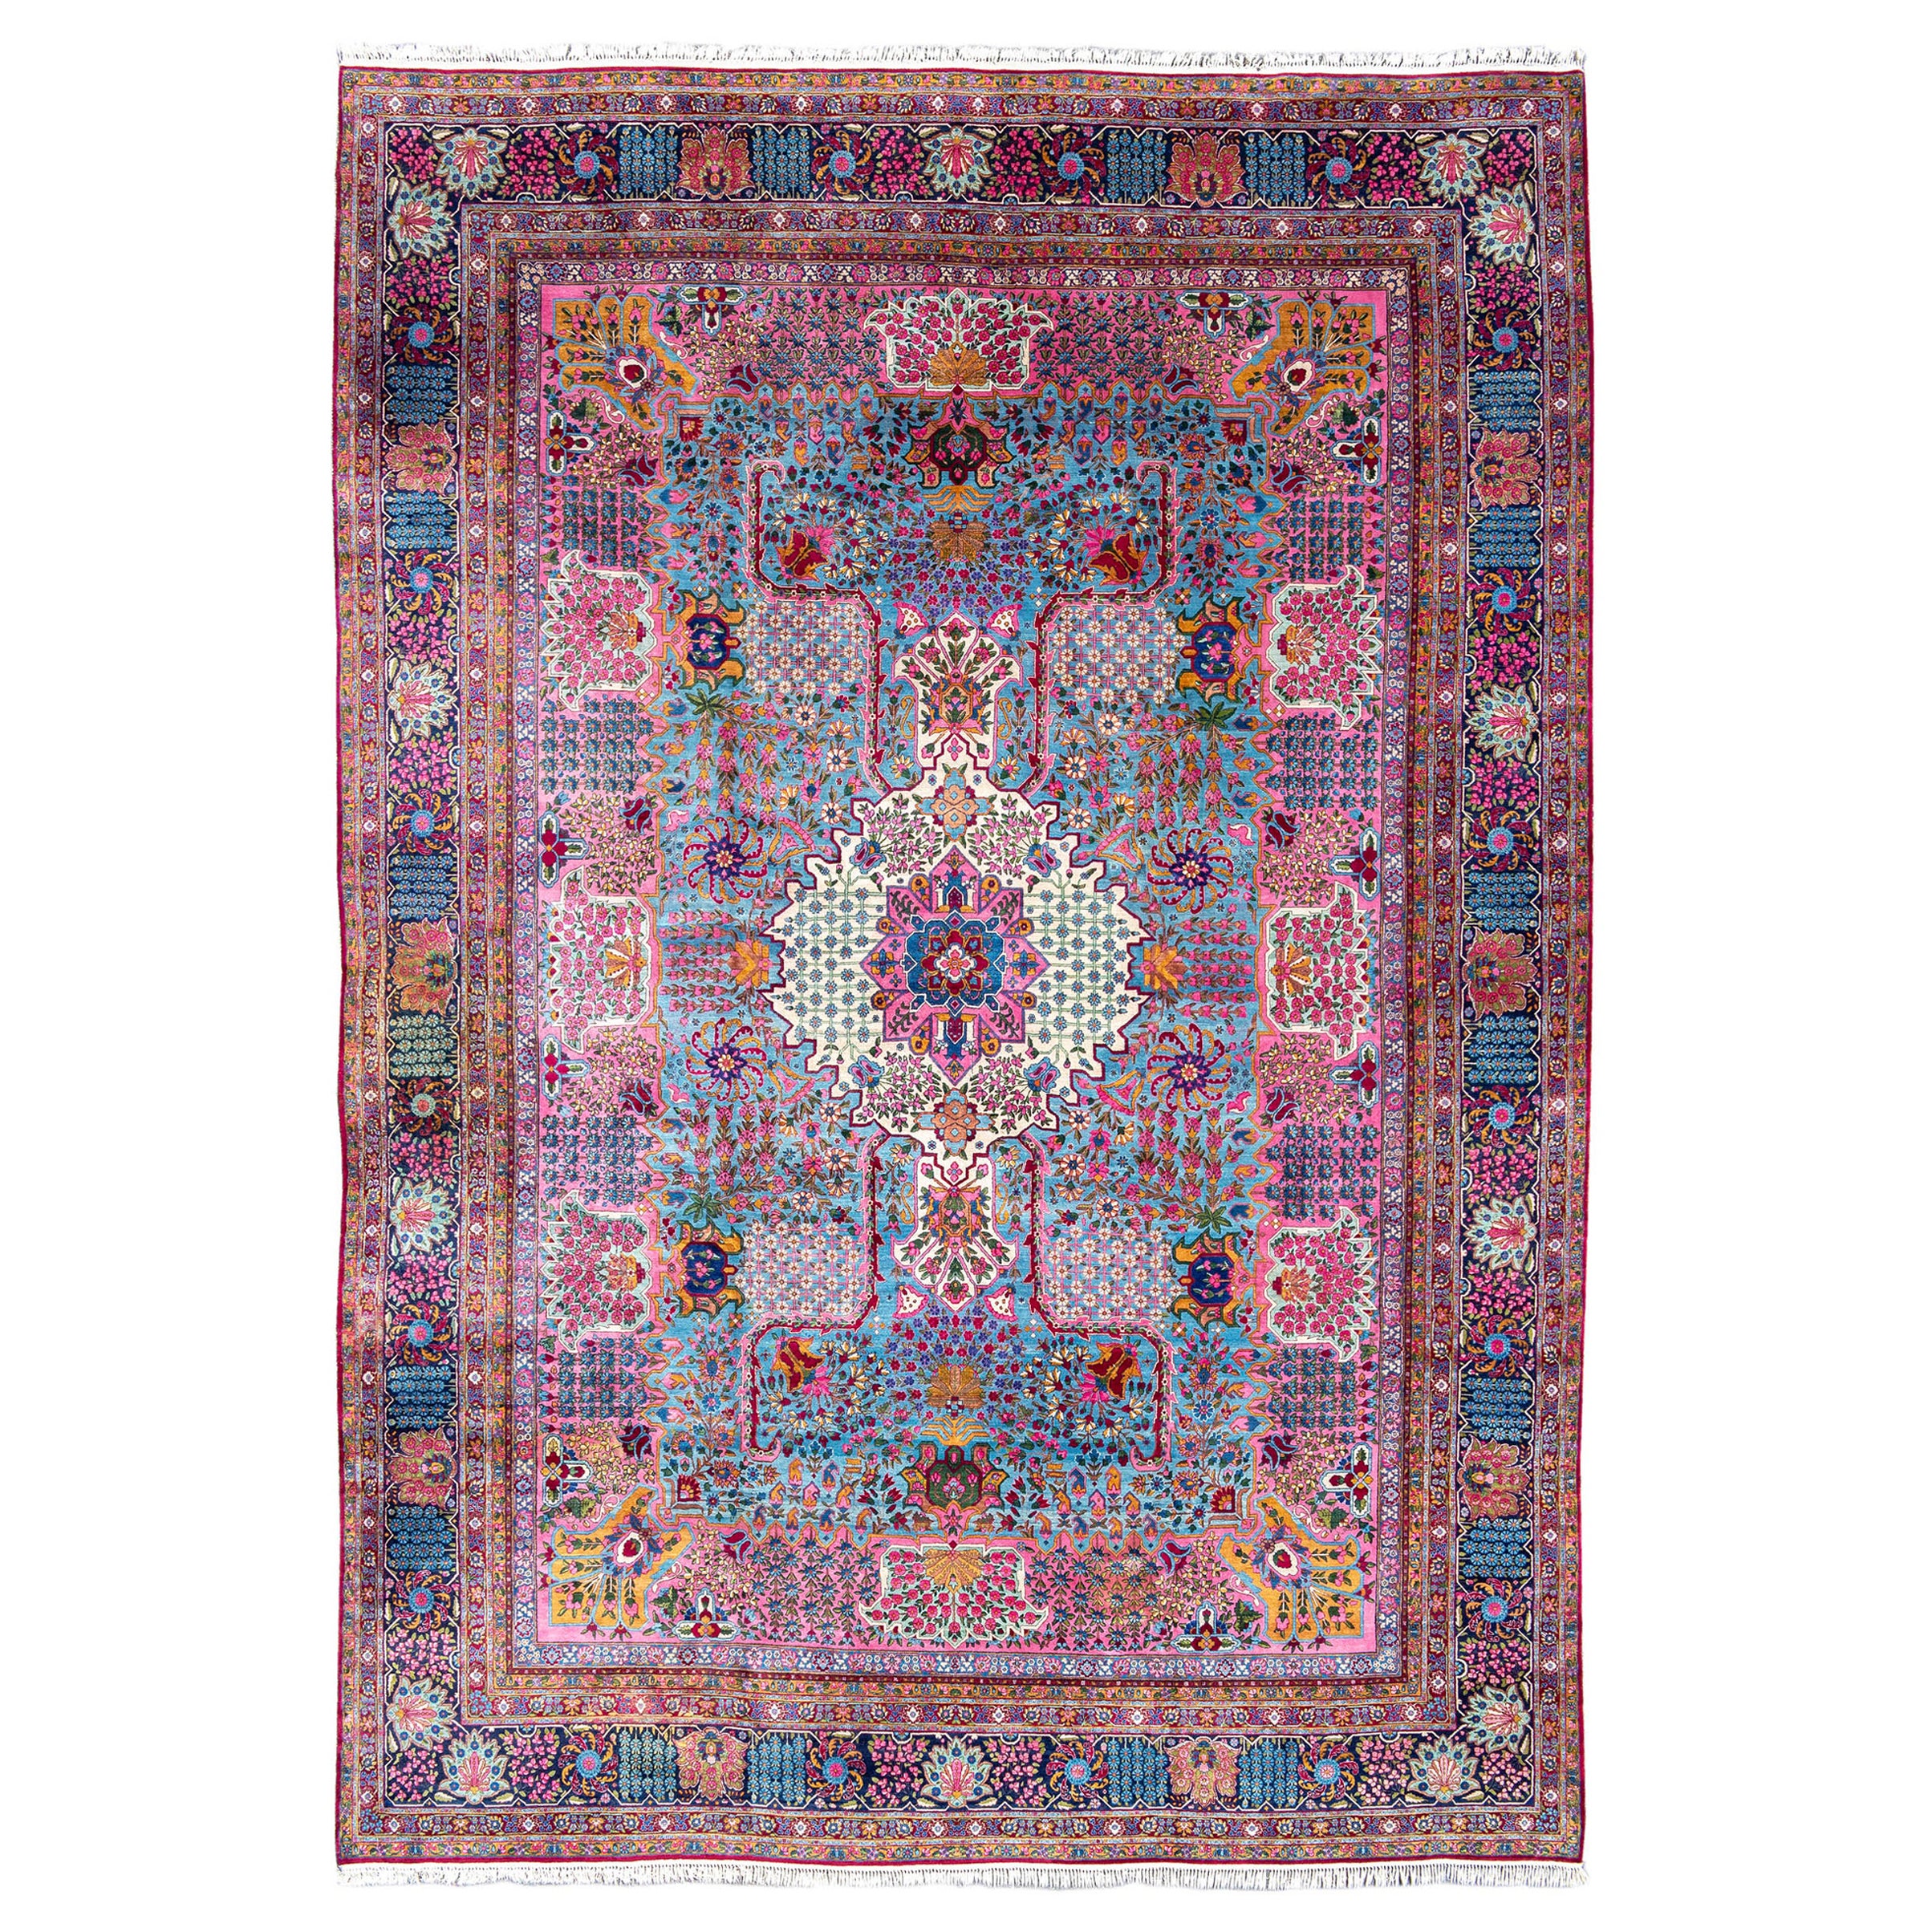 Antiker großer persischer Kirman-Teppich, frühes 20. Jahrhundert